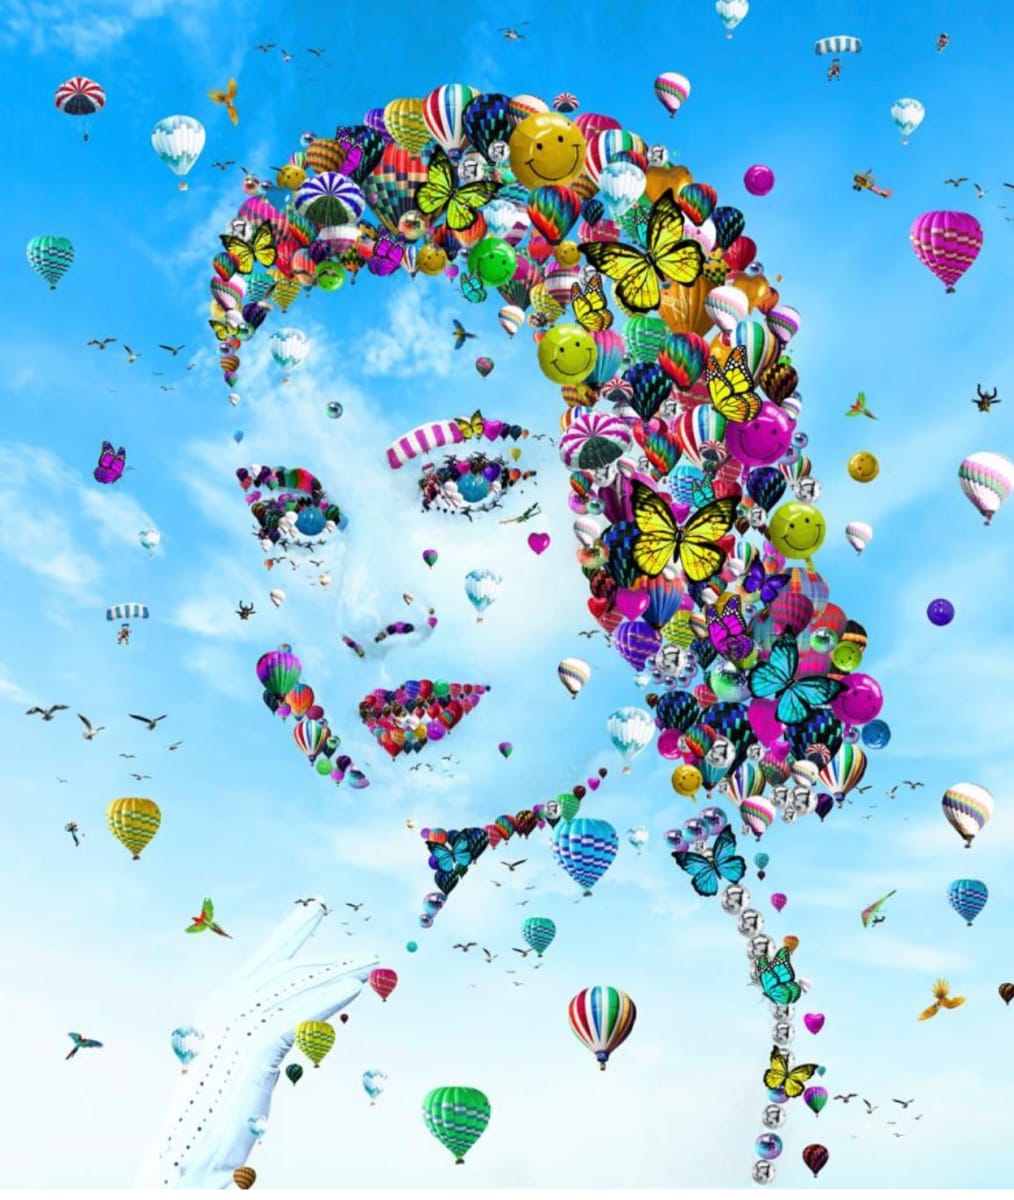 Iain Alexander by Iain Alexander  Image: Princess Grace of Monaco Balloon Series